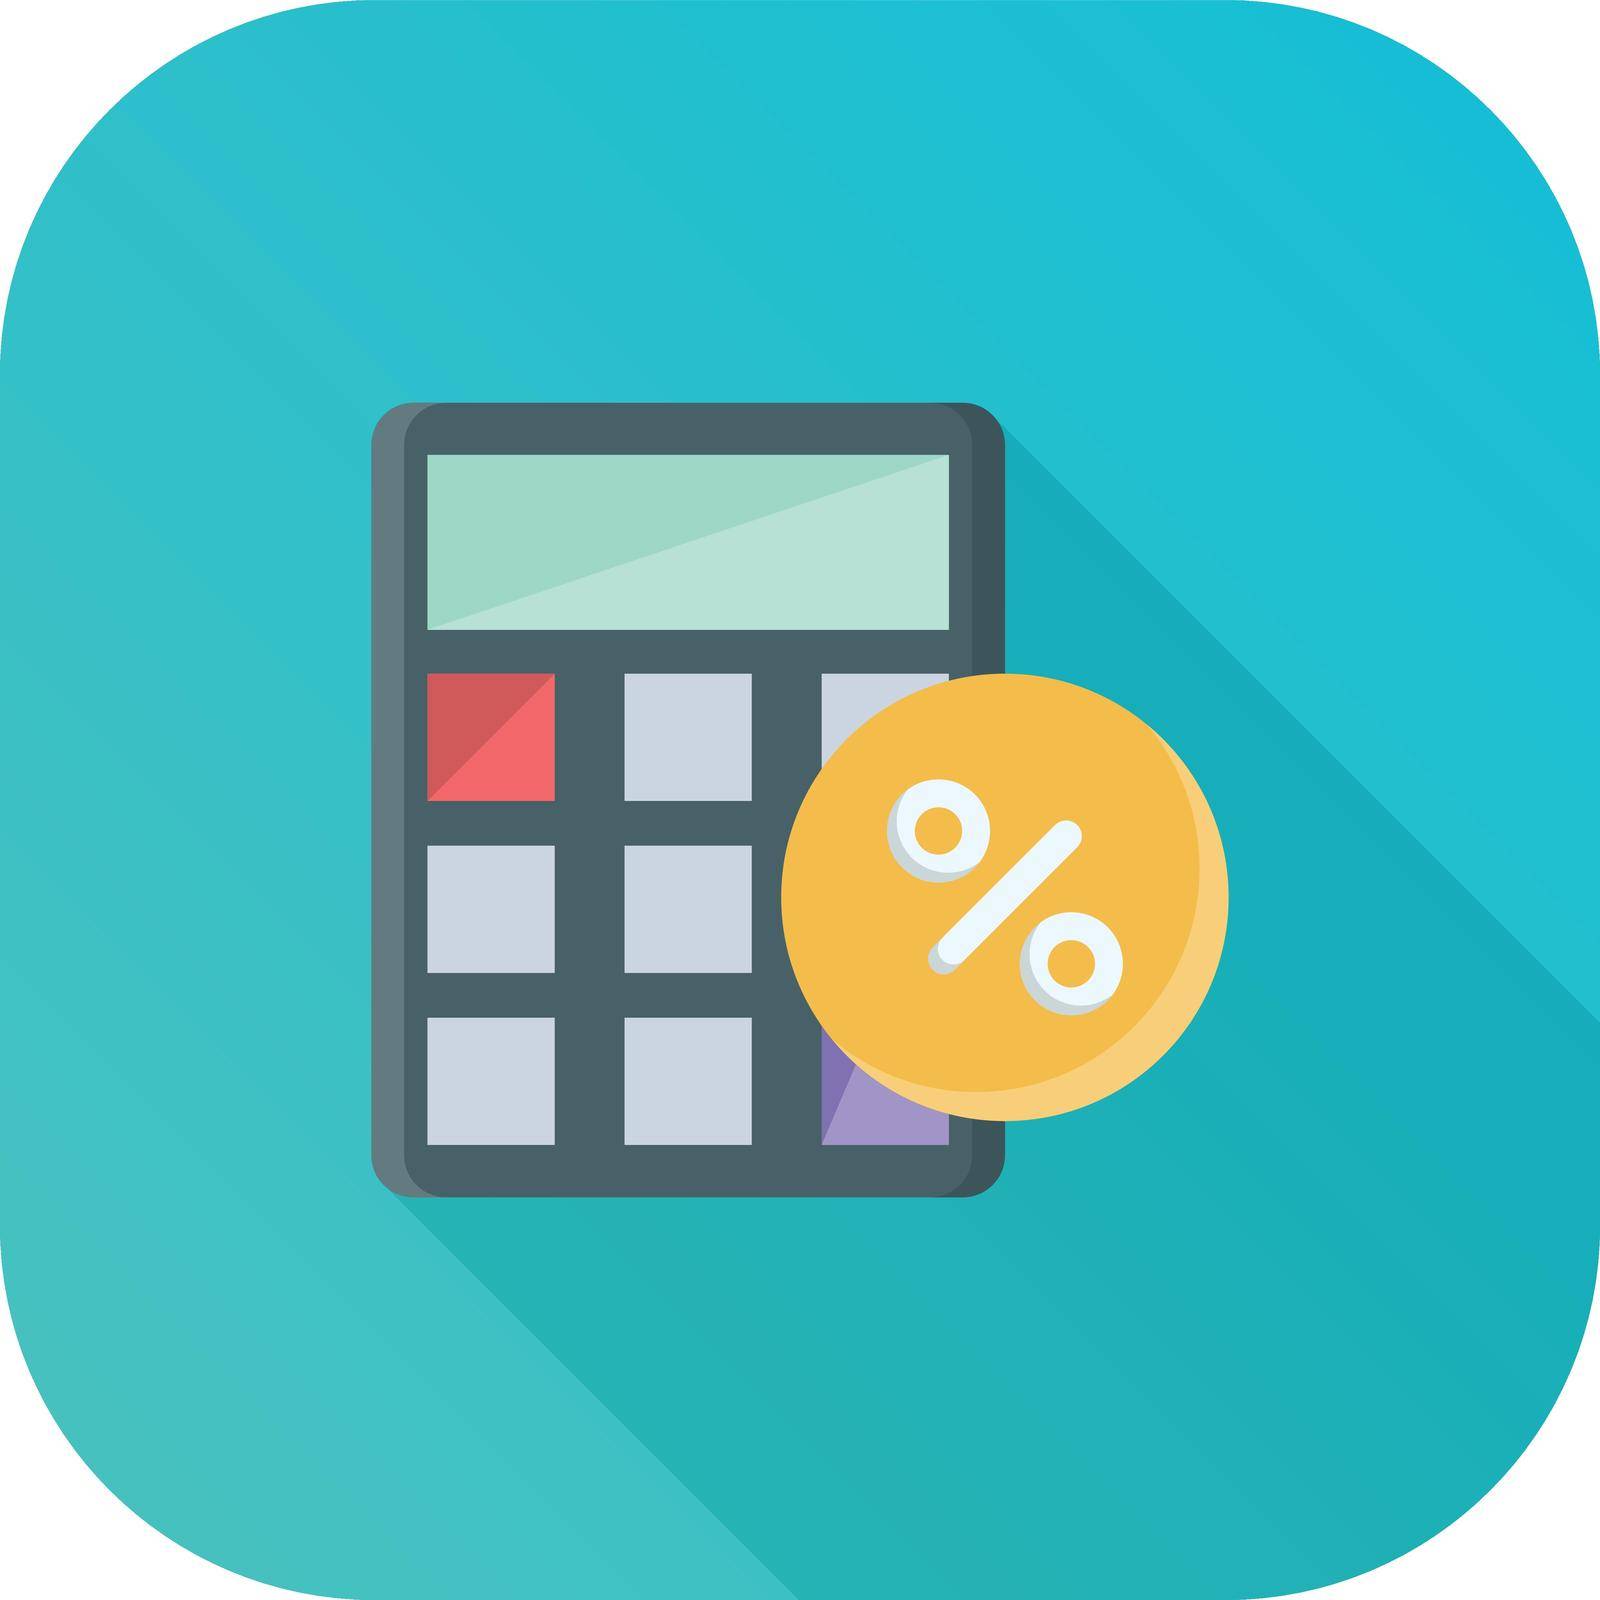 calculator by FlaticonsDesign